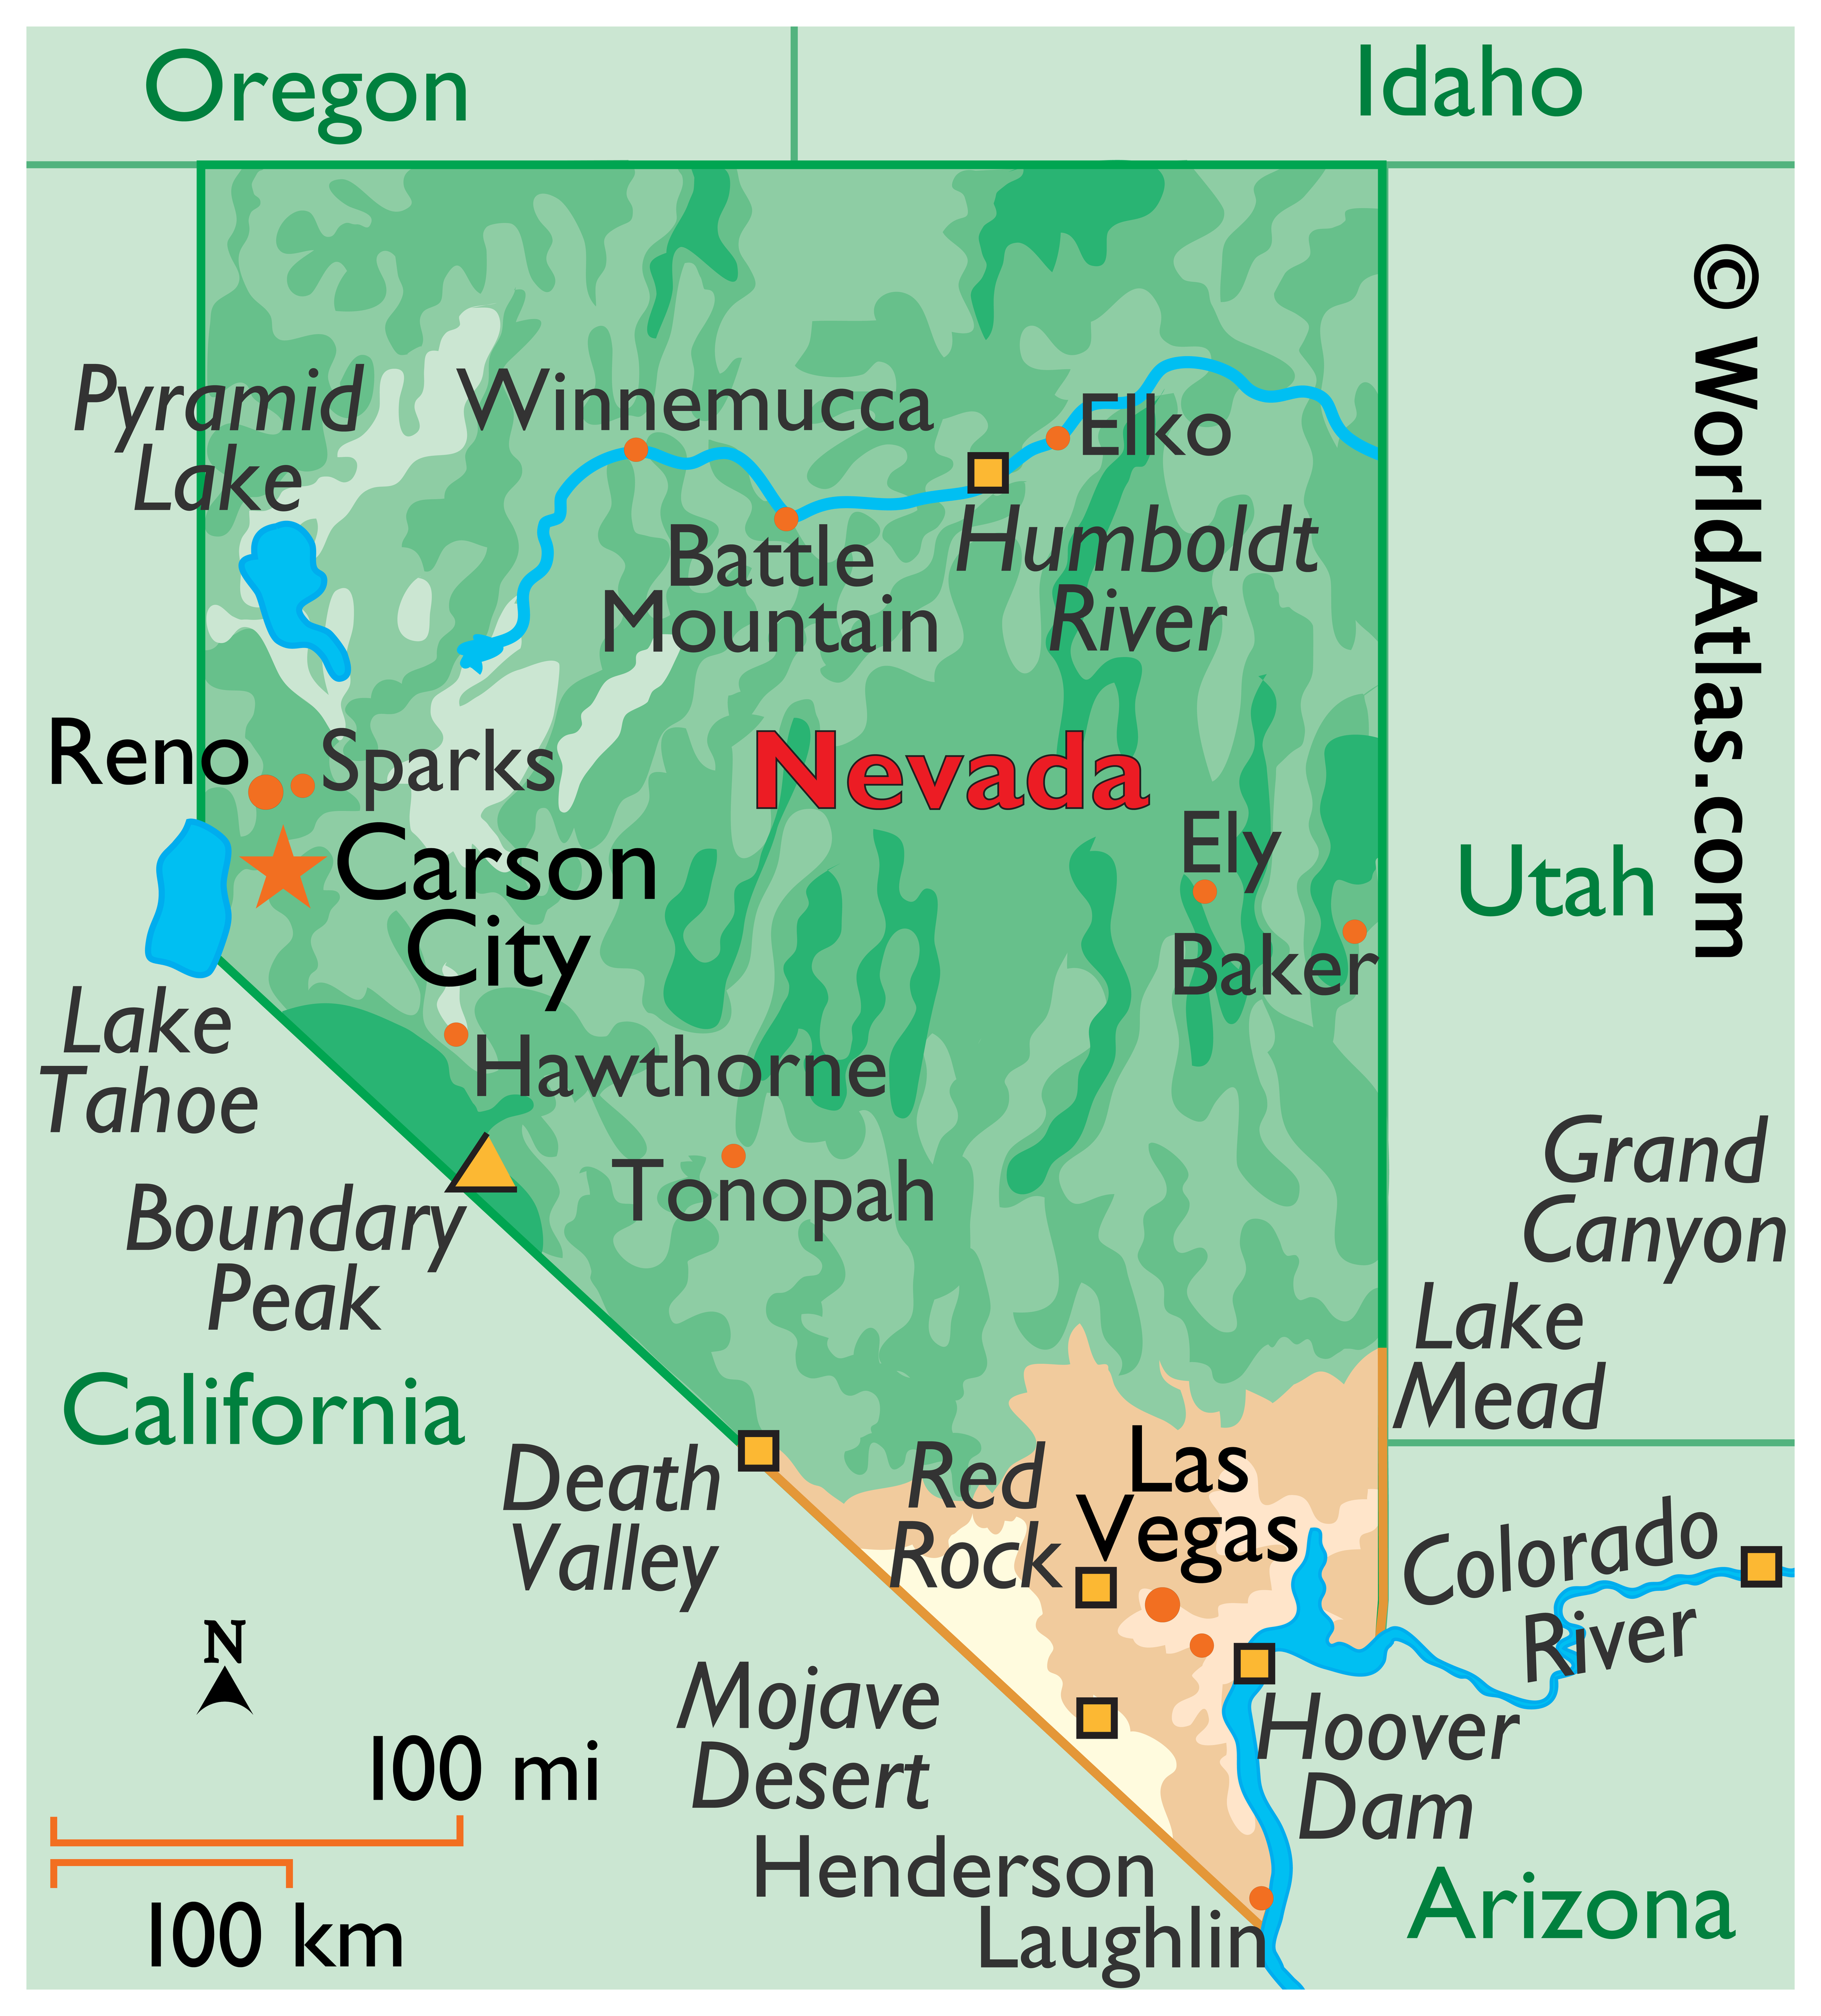 Map of Nevada, USA